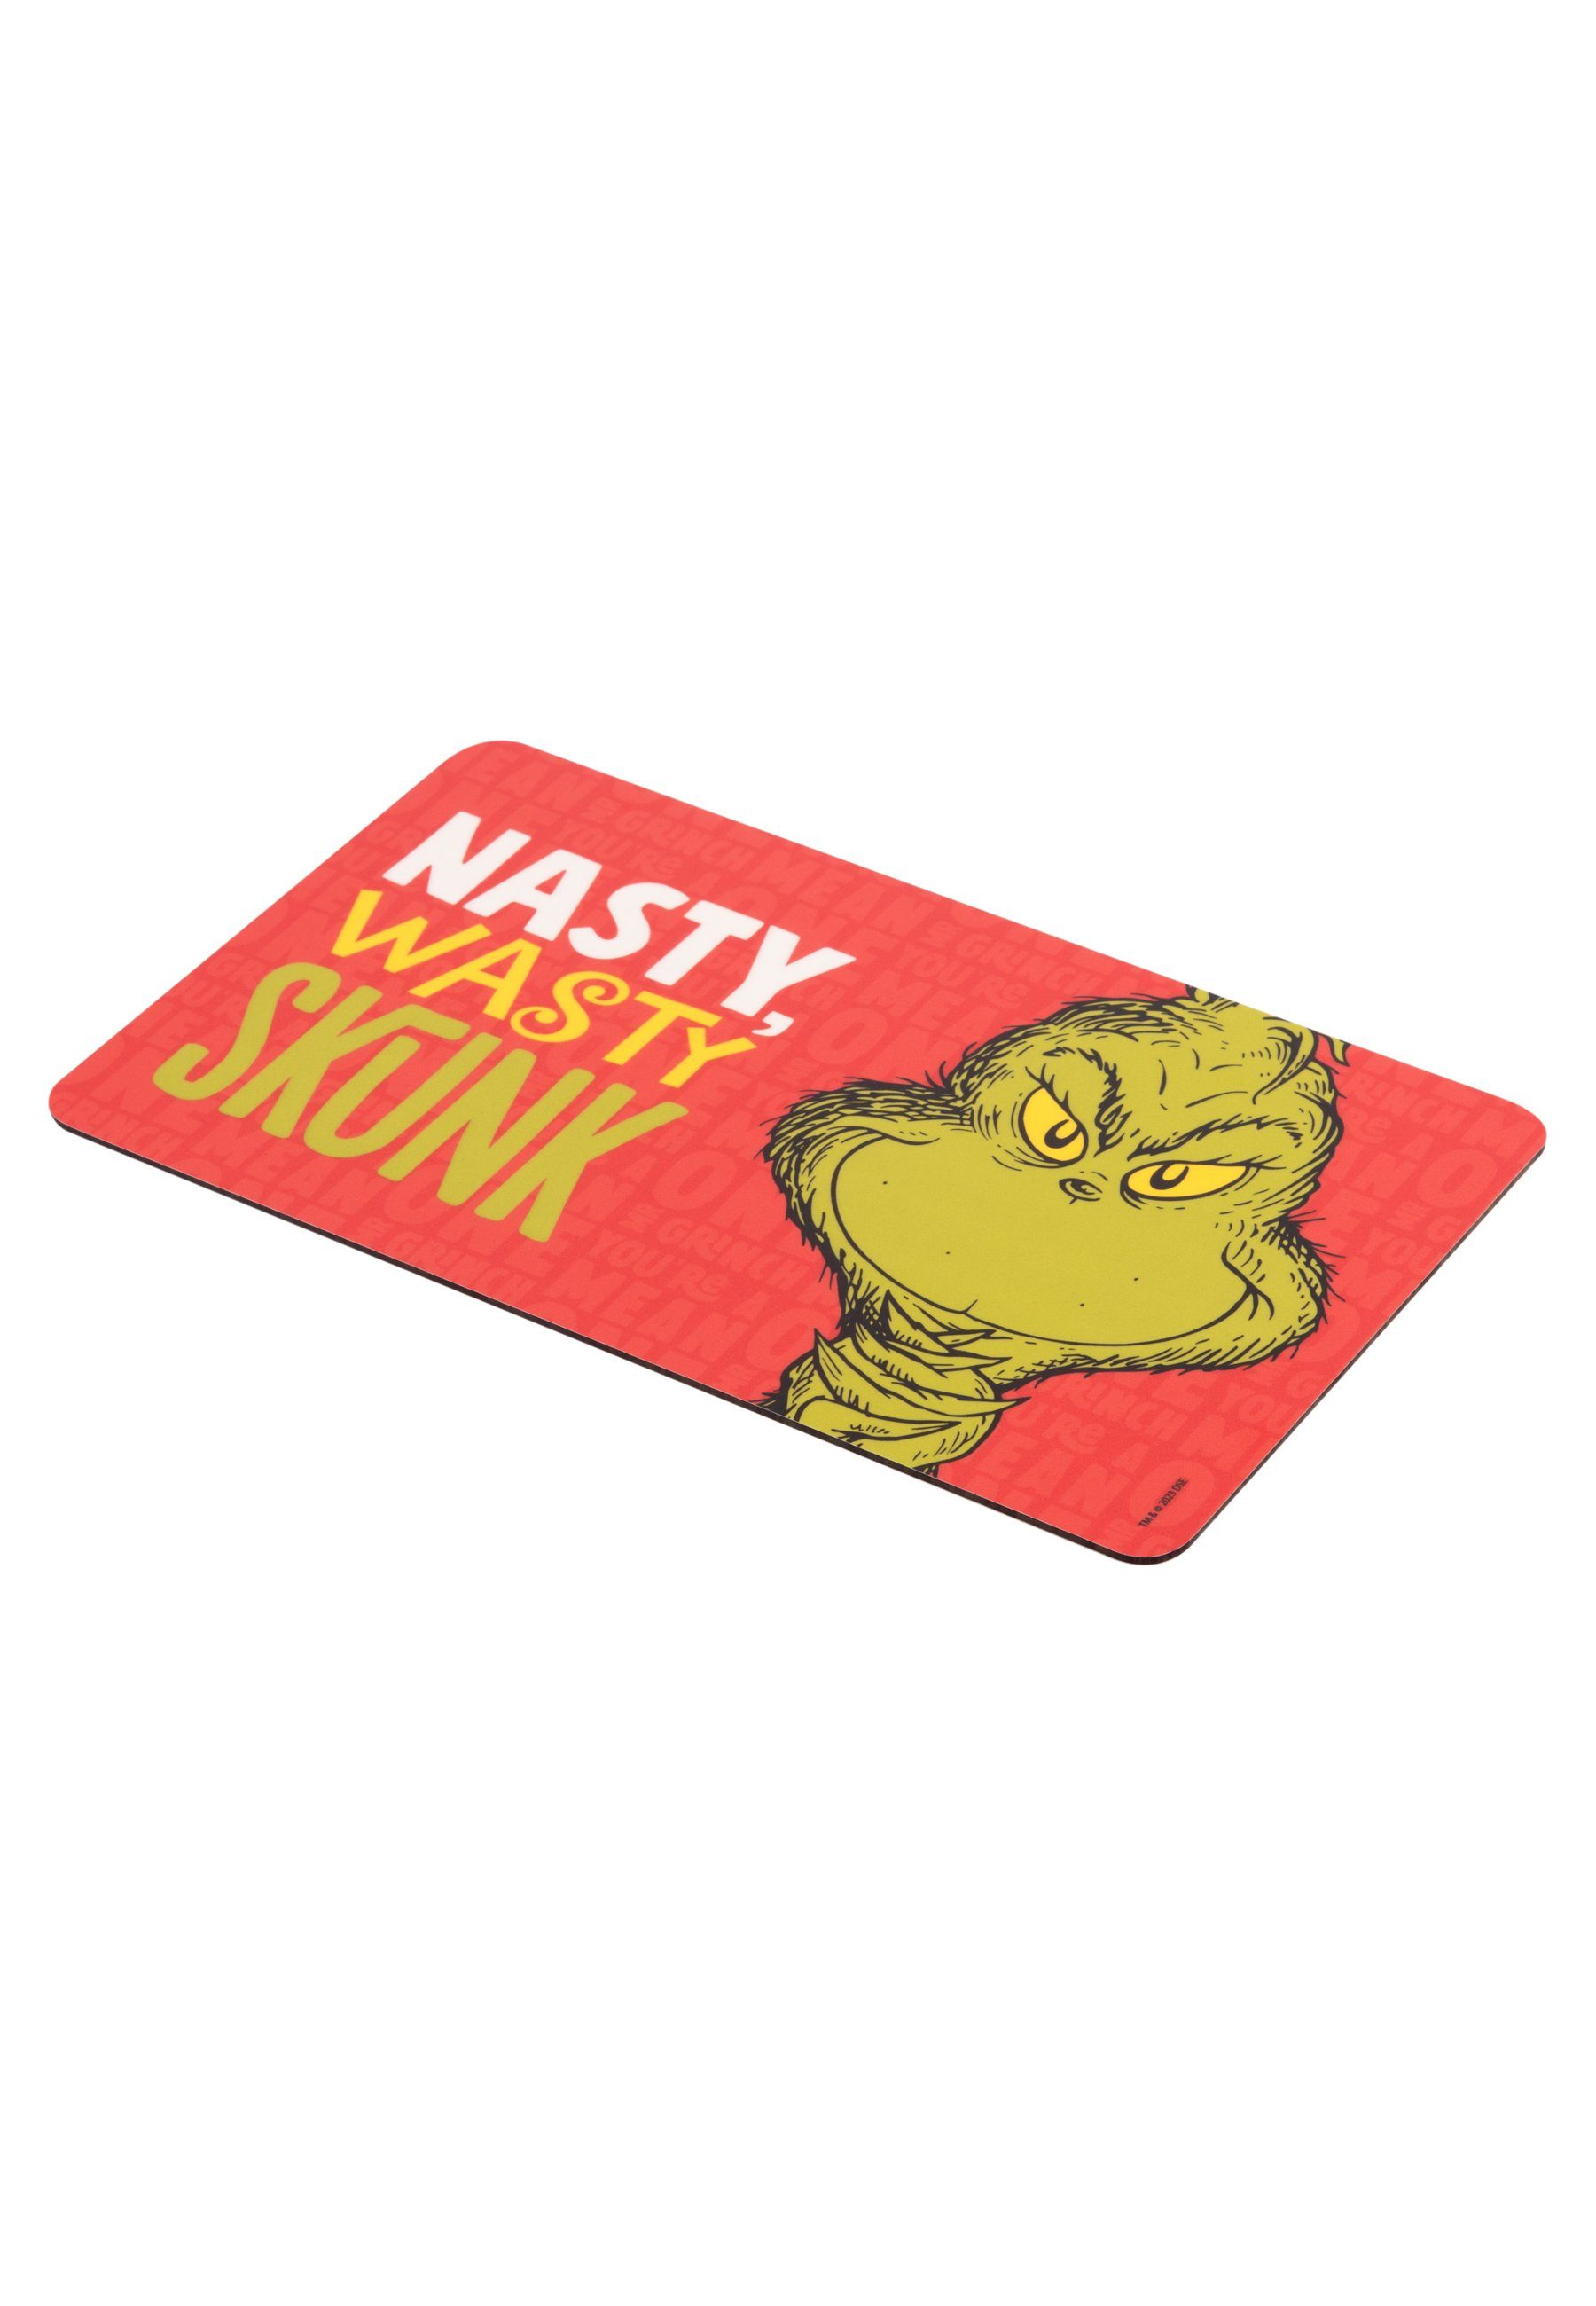 - Labels® Resopal Brettchen Frühstücksbrettchen, United Frühstücksbrett - The Nasty Wasty Grinch Skunk